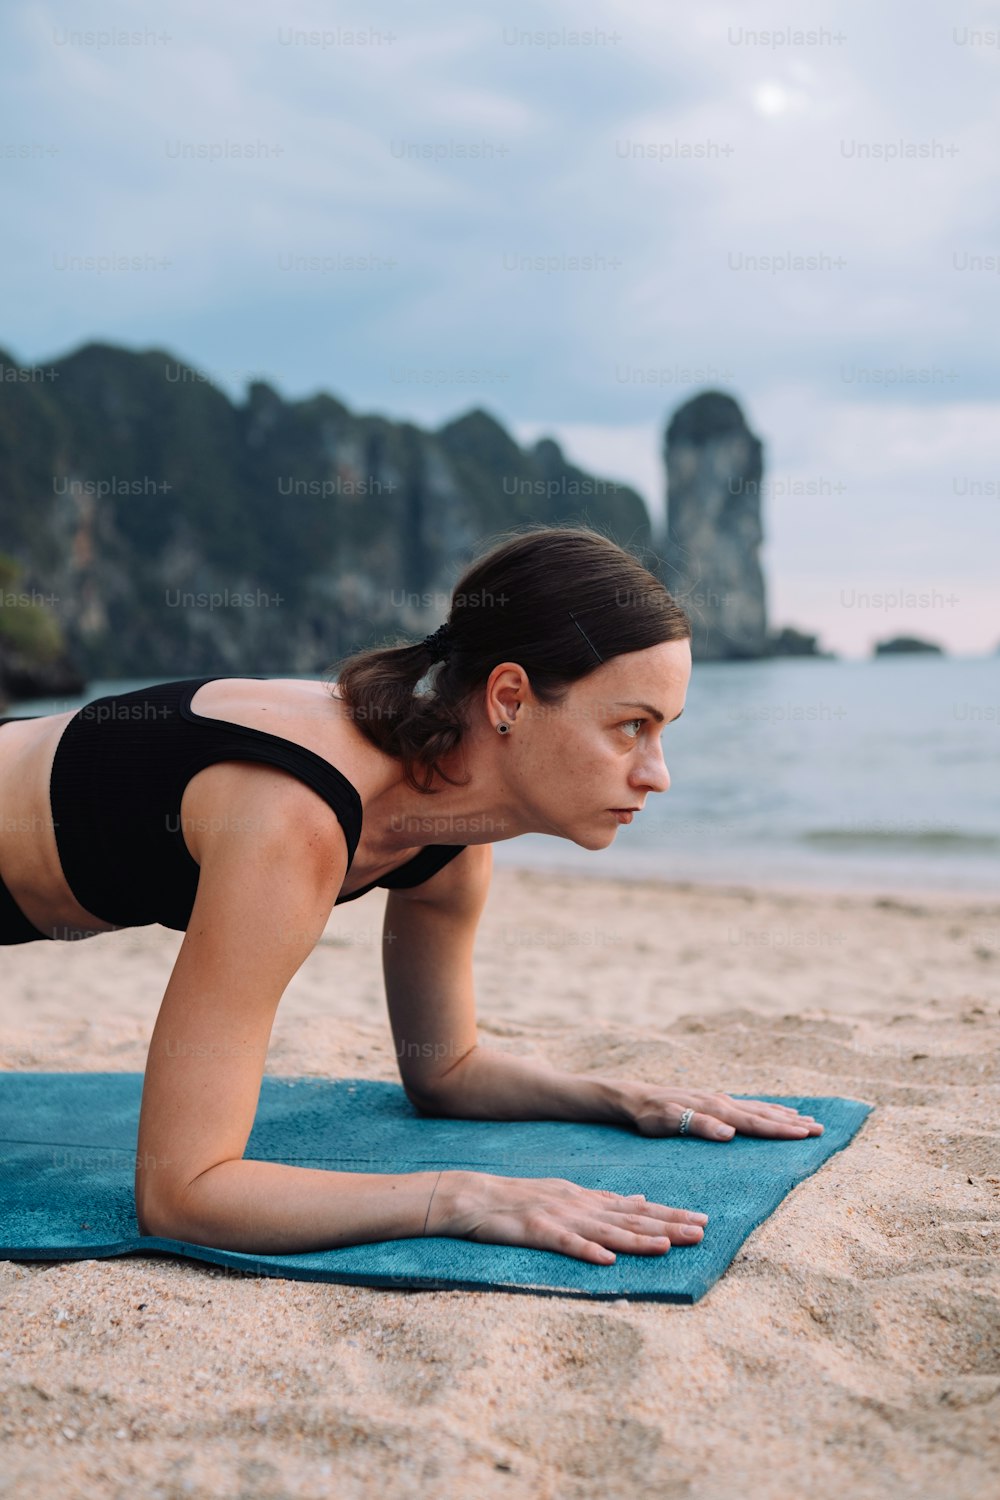 a woman doing push ups on a towel on the beach